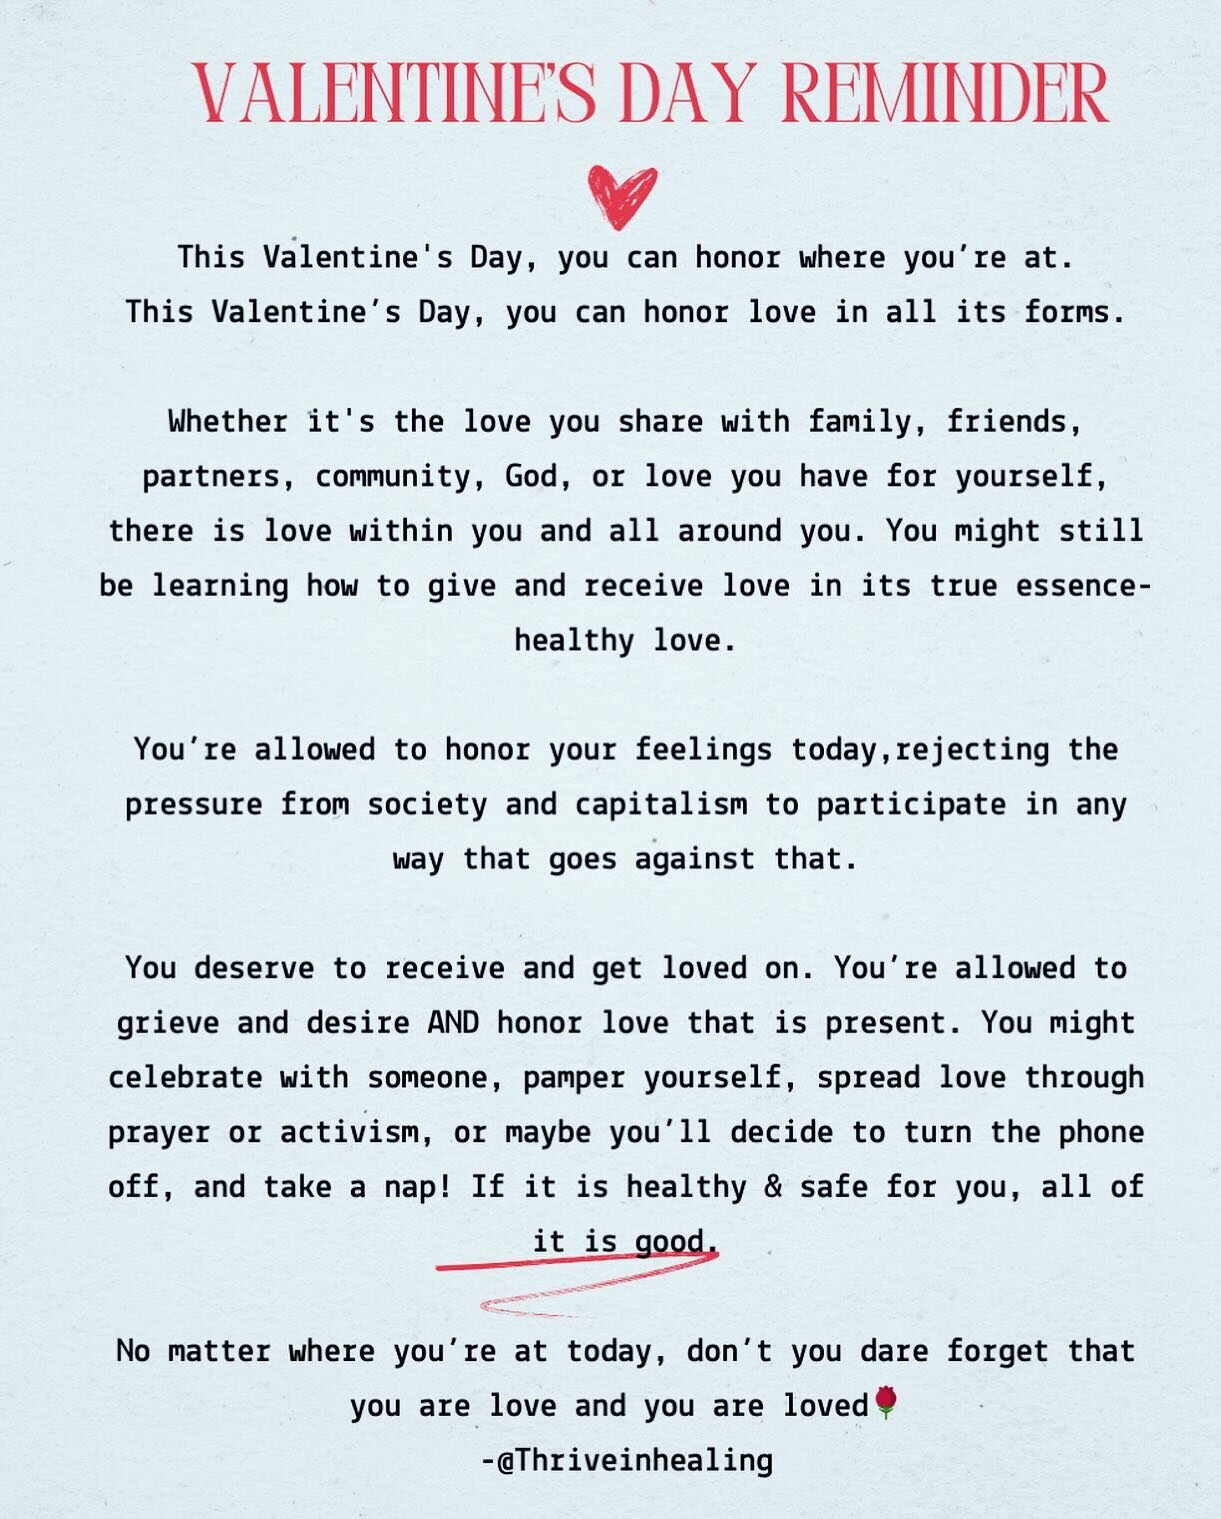 Sending Love 🌹❤️🤎💛
.
.
.
.
#valentines #love #selflove #romanticlove #platoniclove #community #familylove #vday #godslove #coping #reminder #wellness